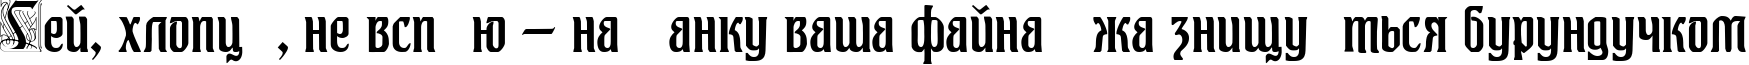 Пример написания шрифтом Augusta One текста на украинском